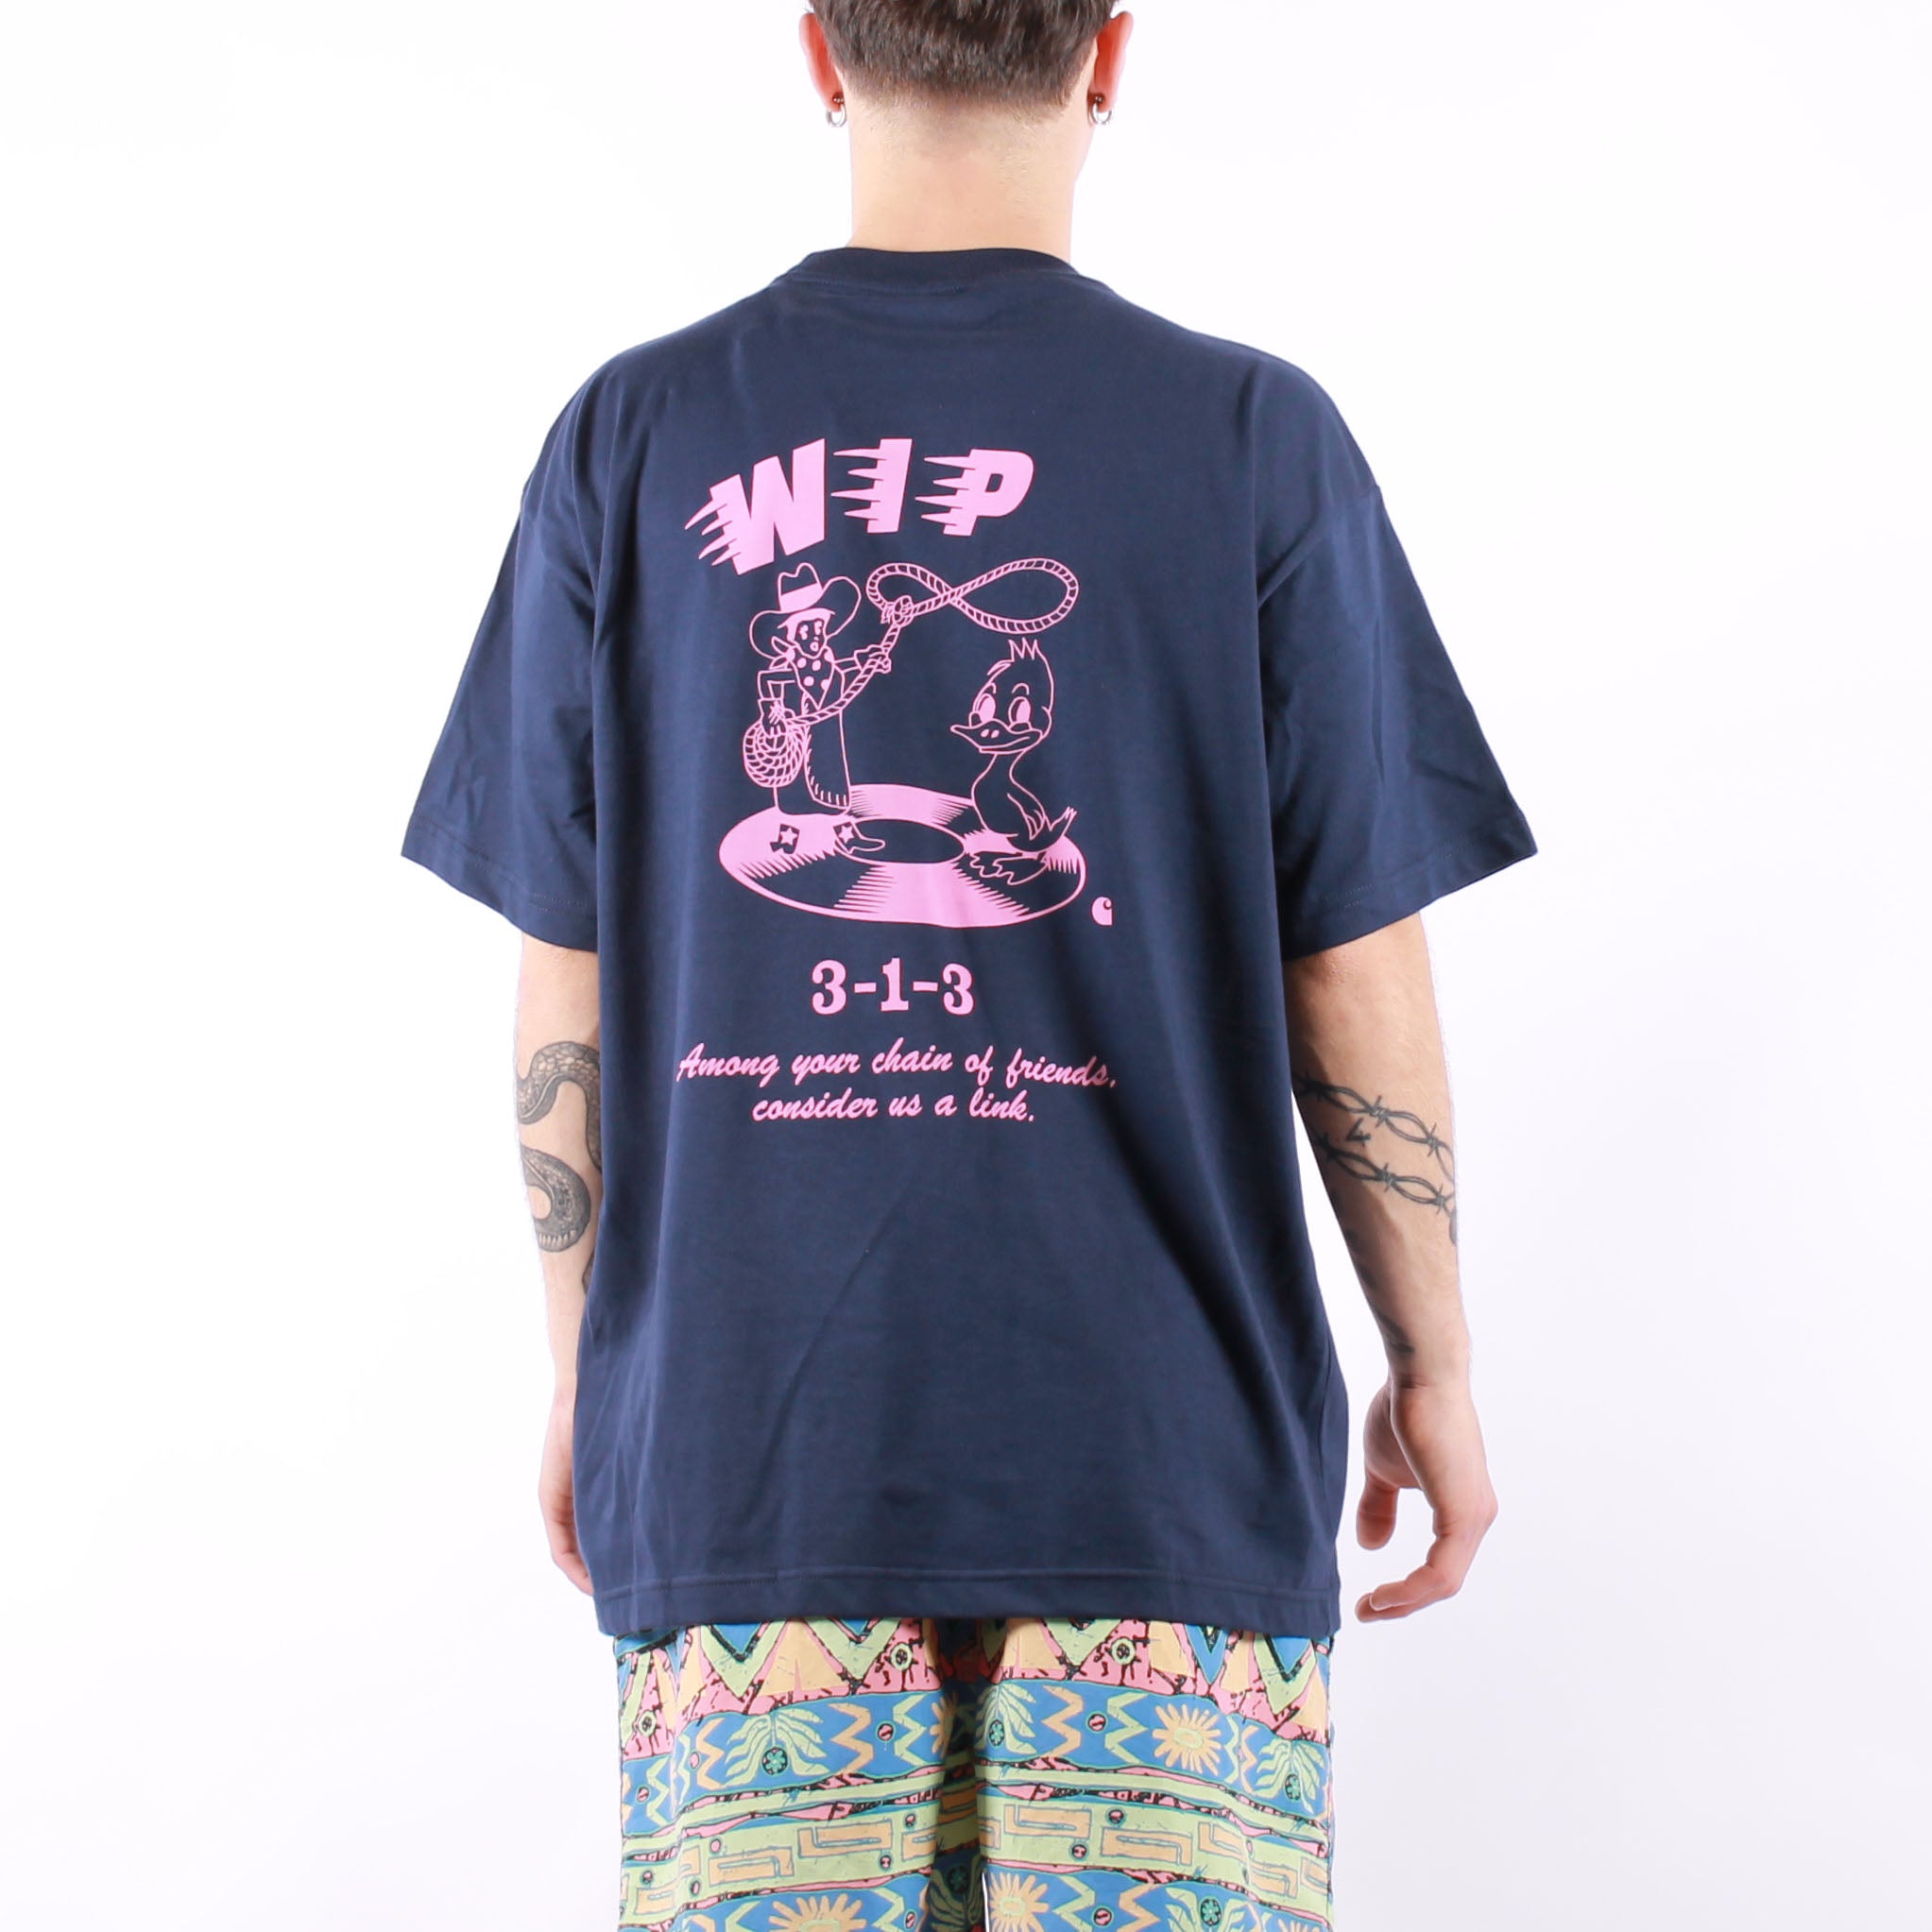 Carhartt WIP - SS Friendship T-Shirt - Air Force Blue Light Pink | Carhartt WIP | T-Shirt | 49.00 | Beach Break Shop